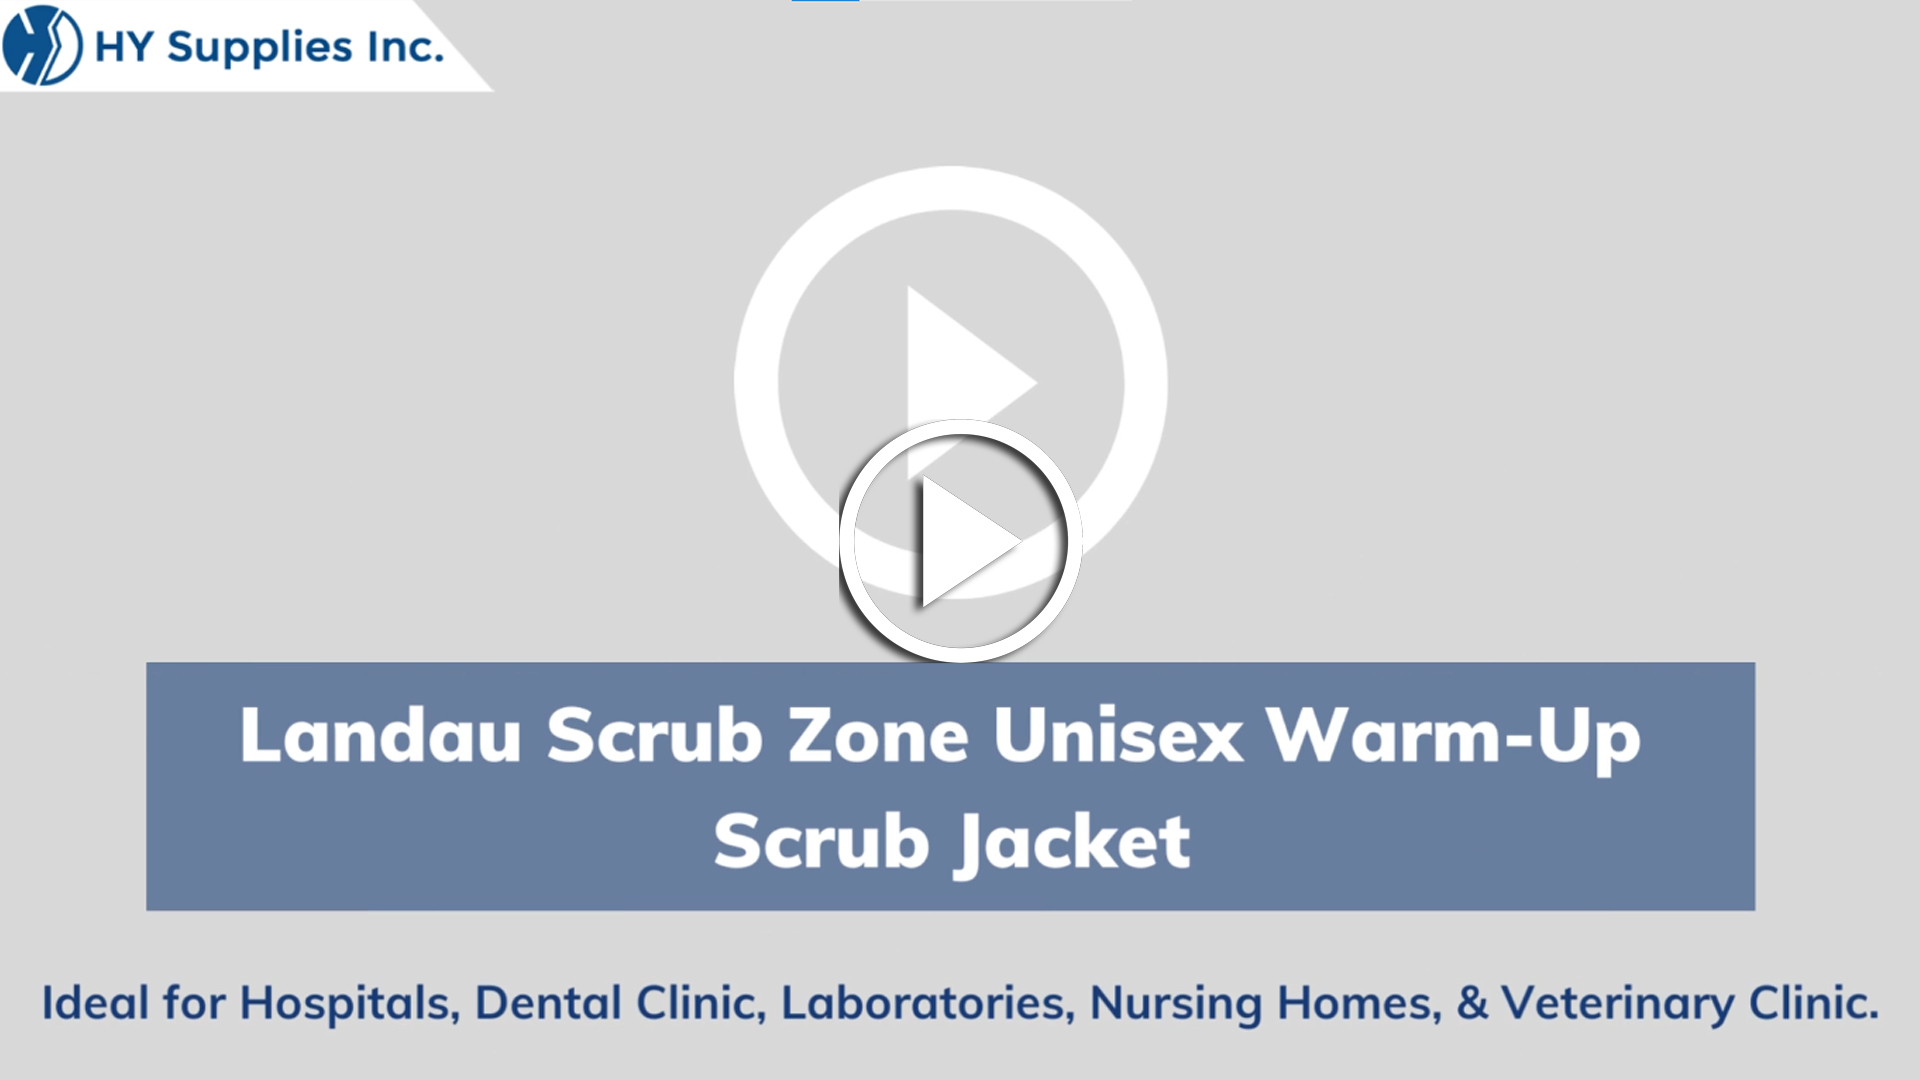 Landau Scrub Zone Unisex Warm-Up Scrub Jacket